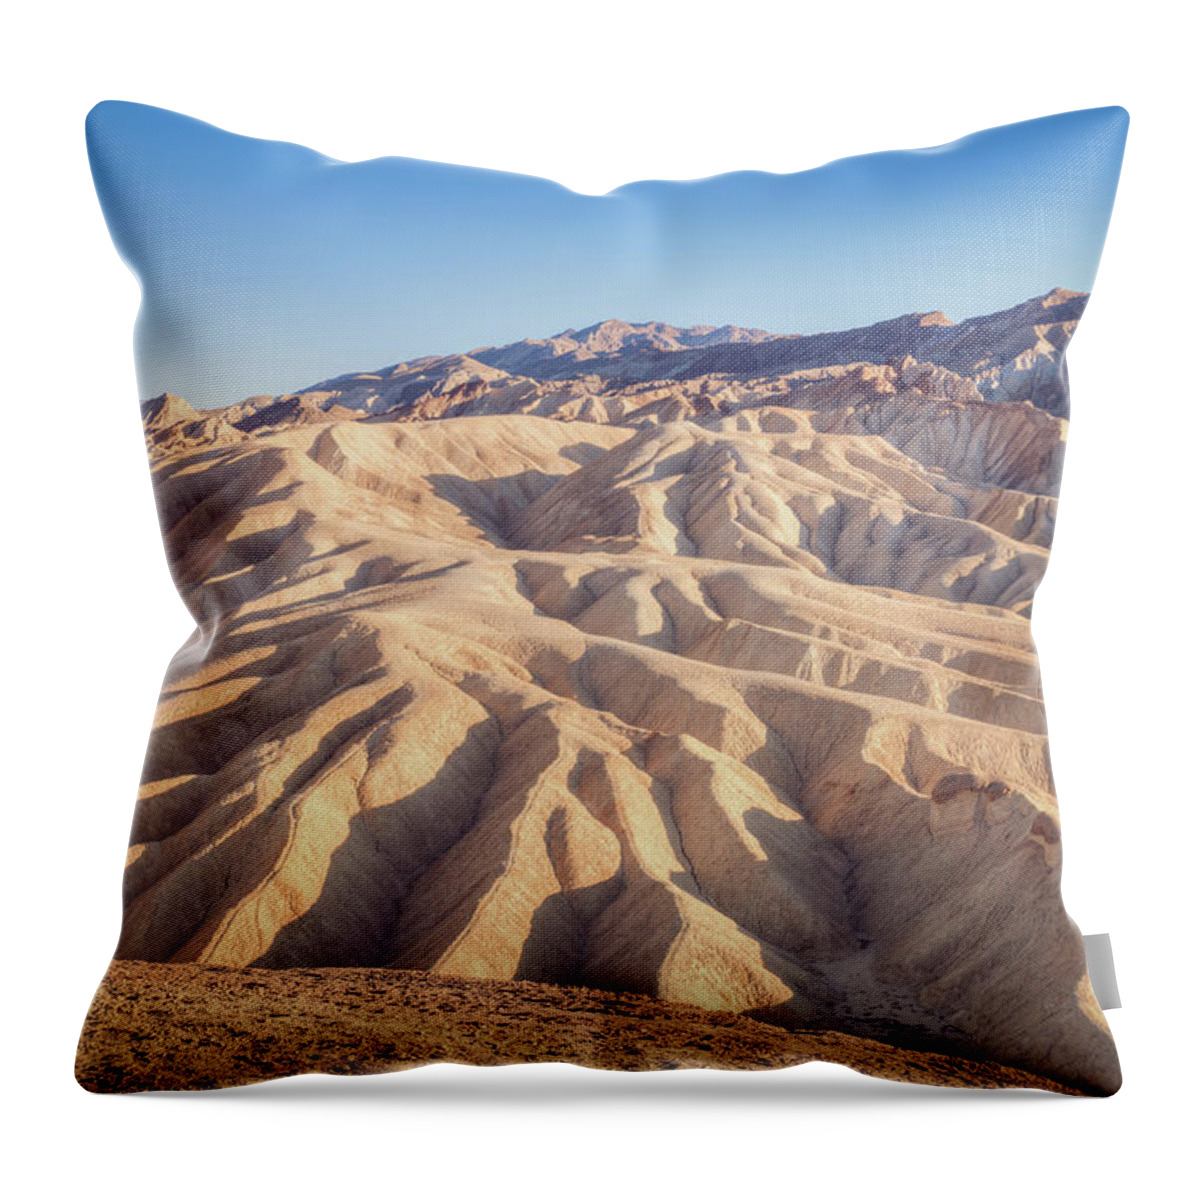 Zabriskie Throw Pillow featuring the photograph Zabriskie Point Sunset Landscape by Ray Devlin